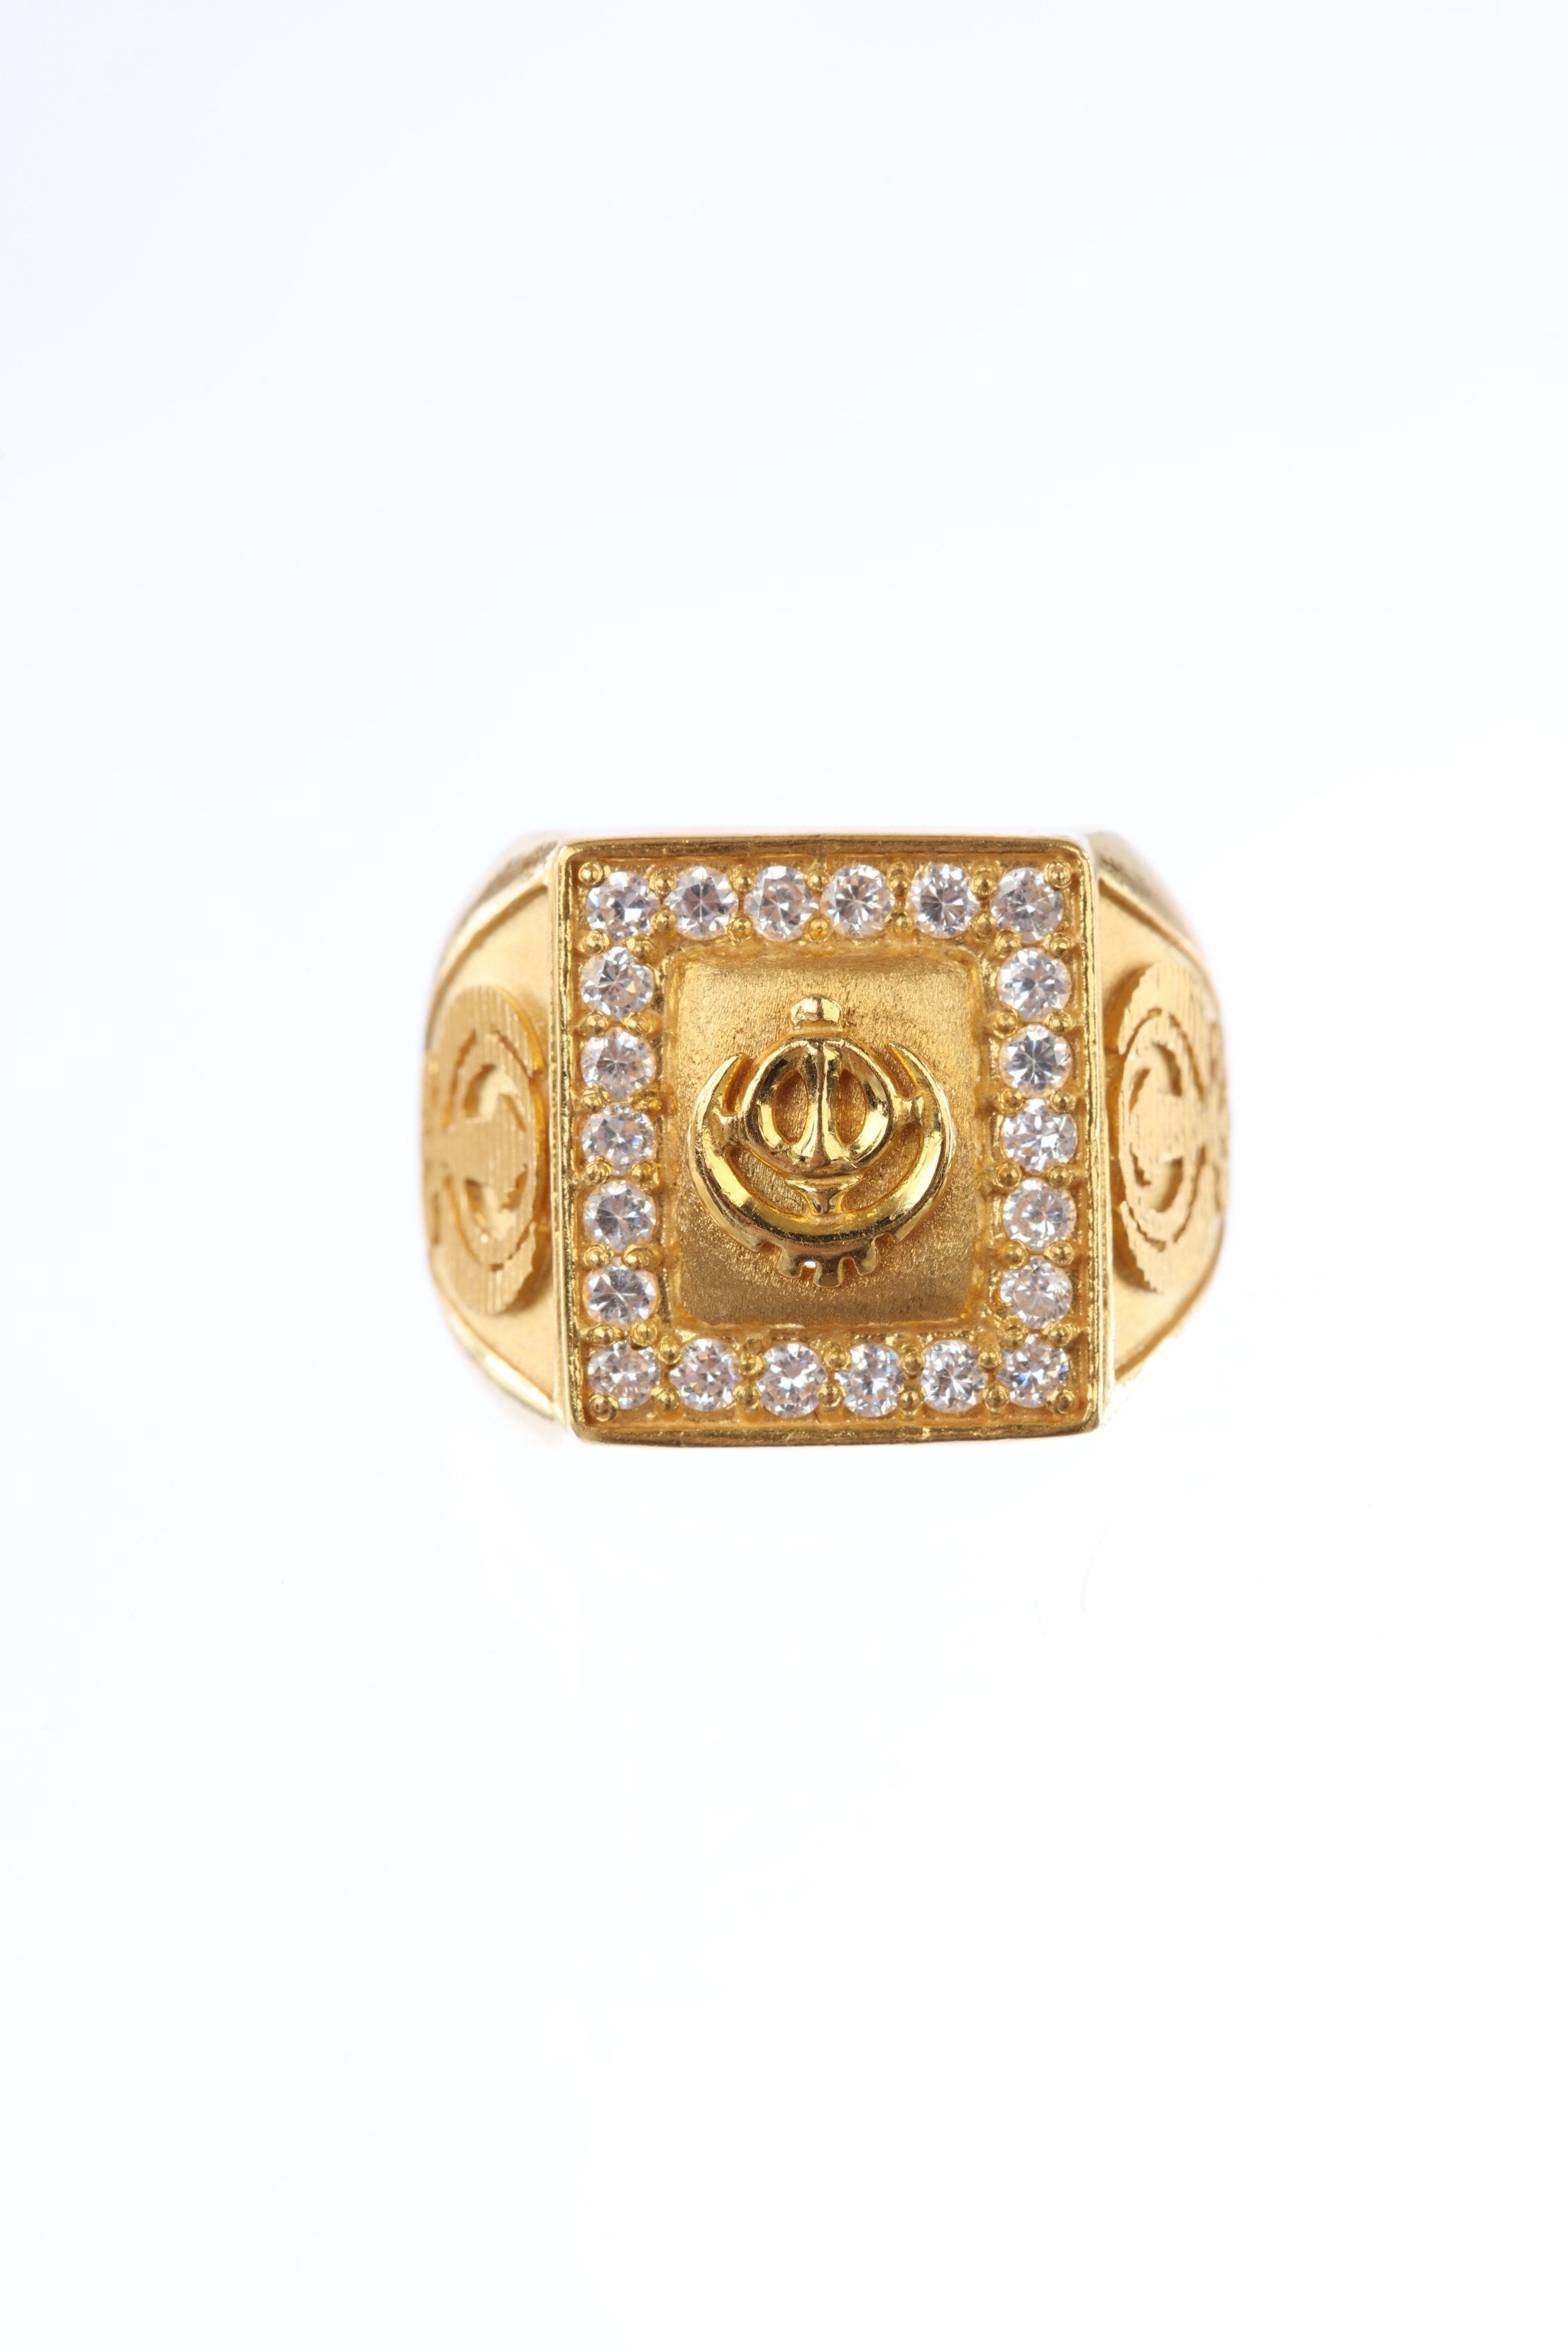 Buy Senco Gold 22k (916) Yellow Gold Ring for Men at Amazon.in